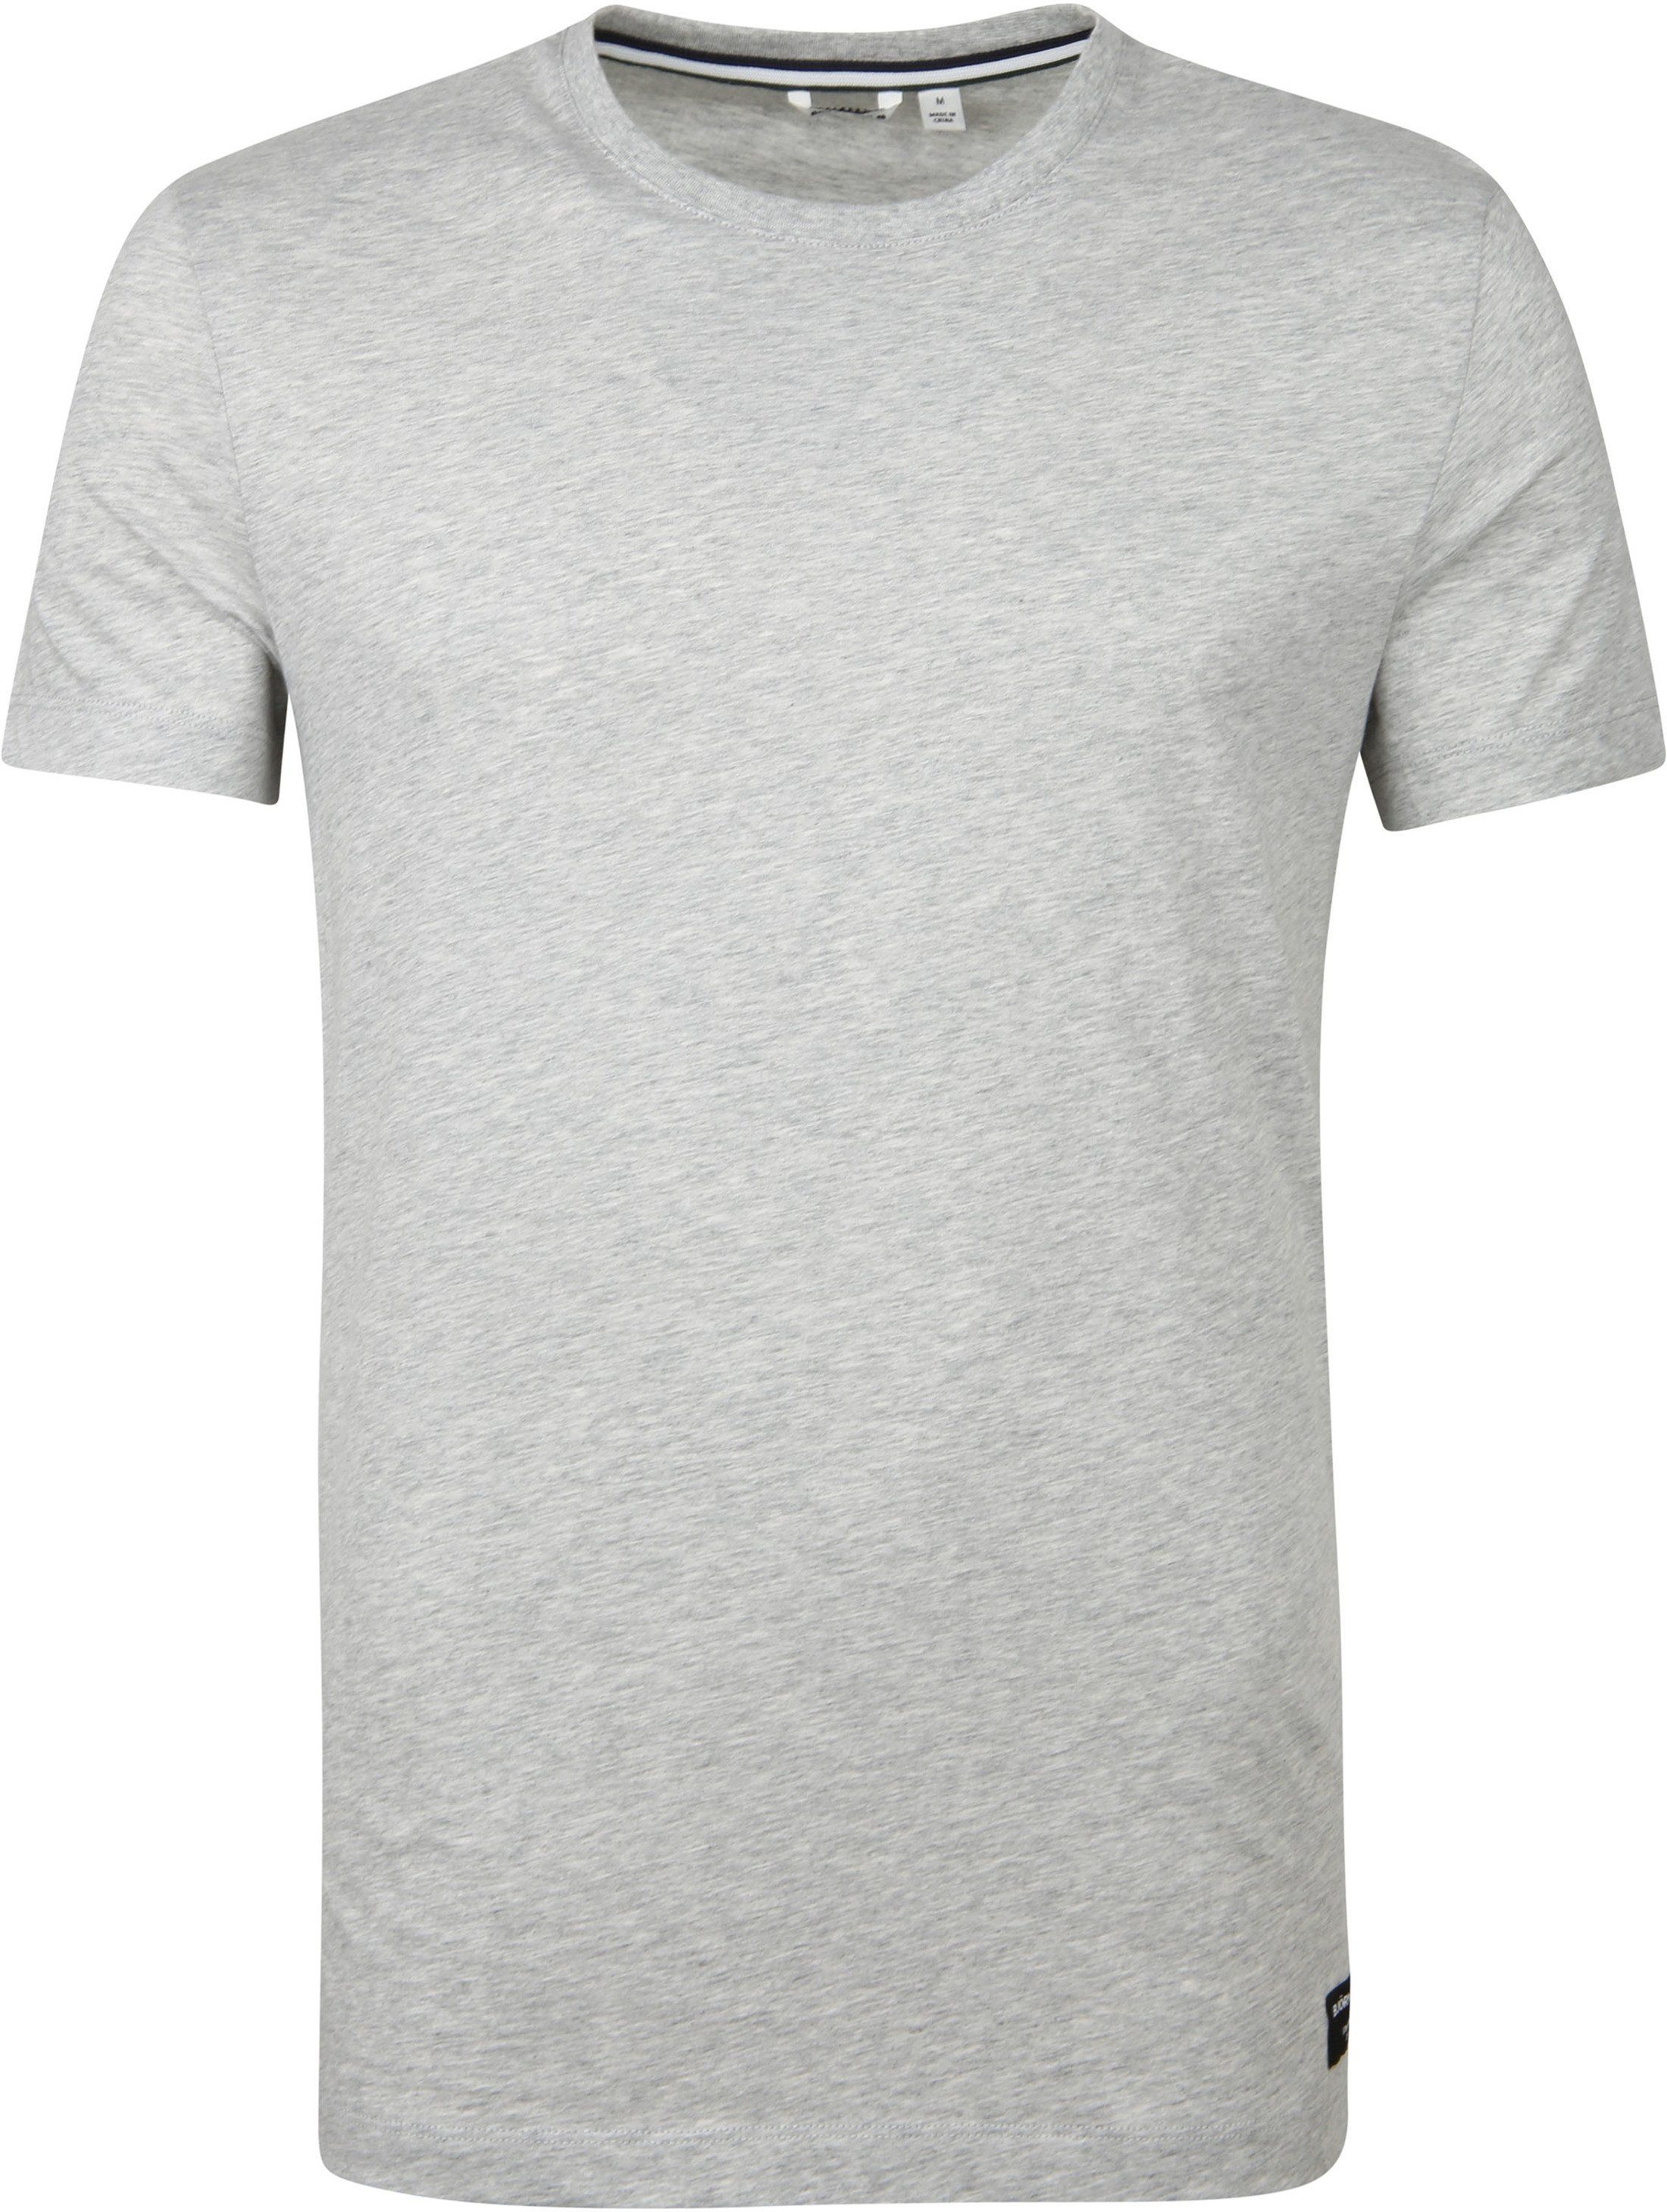 Bjorn Borg Basic T-Shirt Grey size M